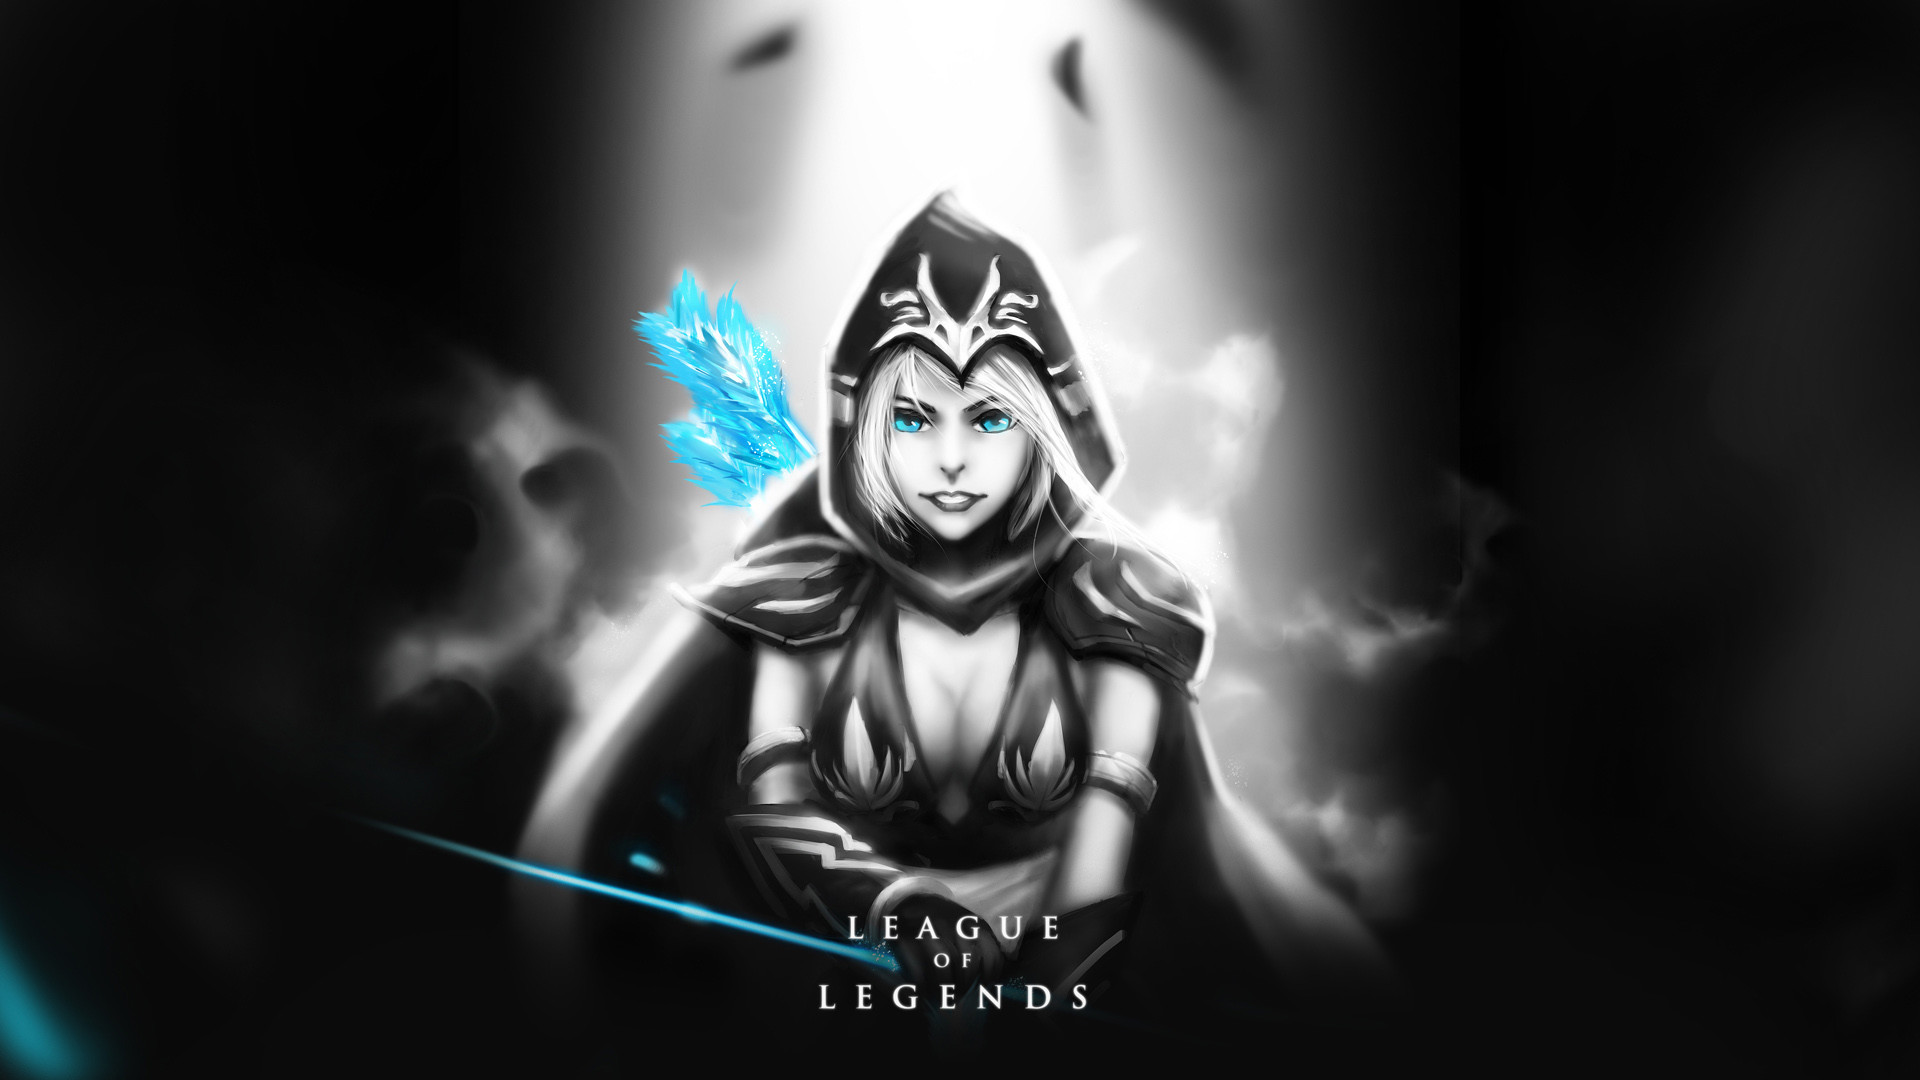 League of Legends Ashe Wallpaper (81+ images)